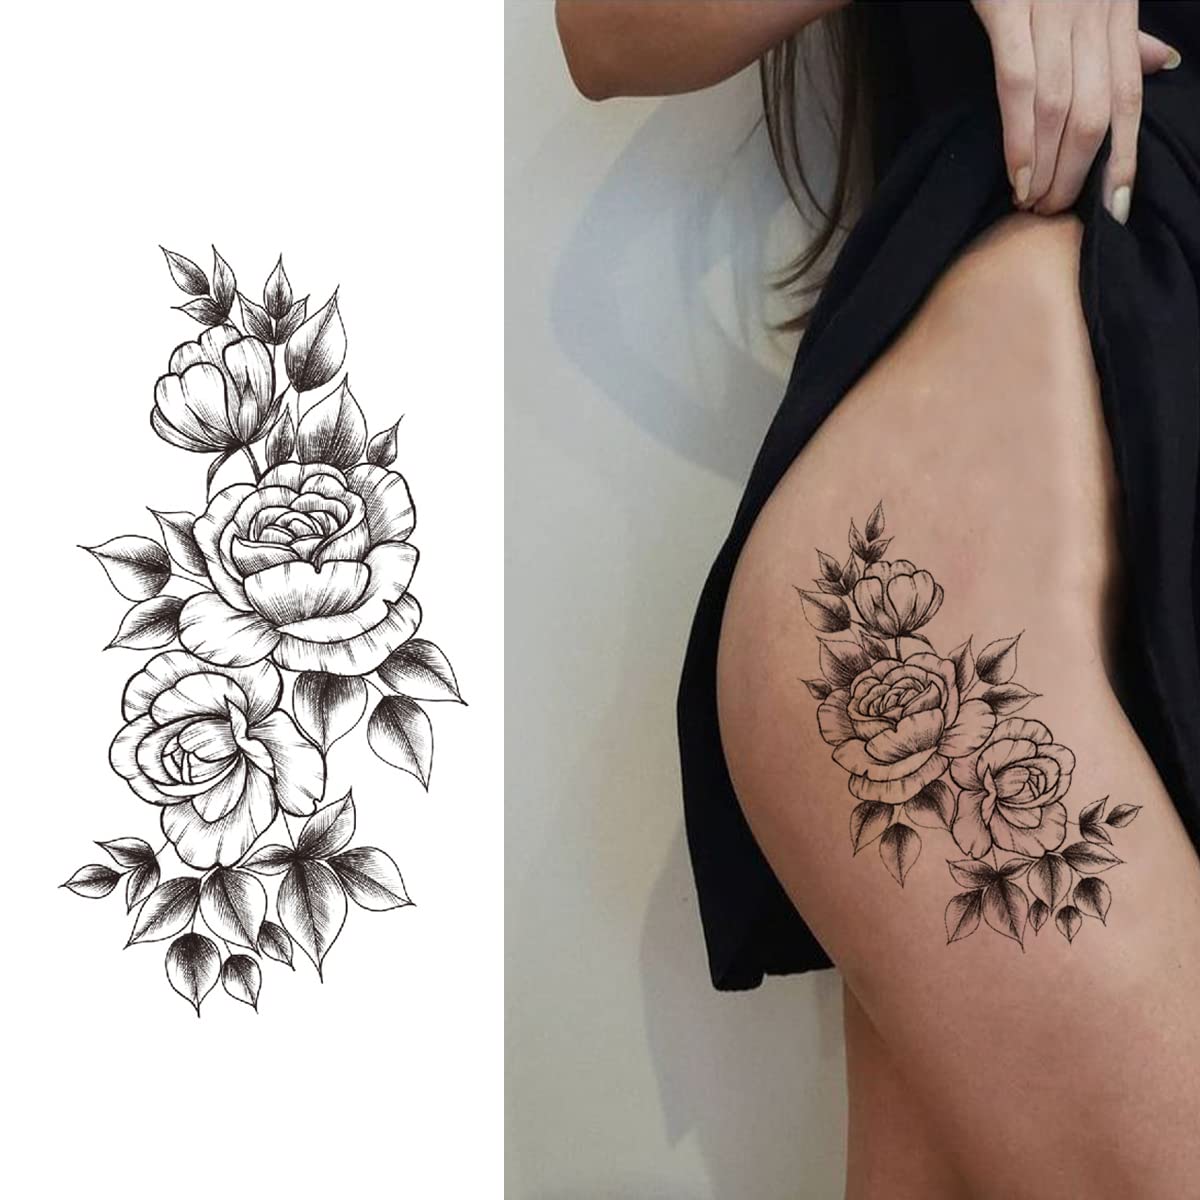 Tazimi 10 Sheets 3D Black Flower Rose Temporary Tattoos For Women, Waterproof Fake Body Art Arm Sketch Tattoo Stickers For Women Girls